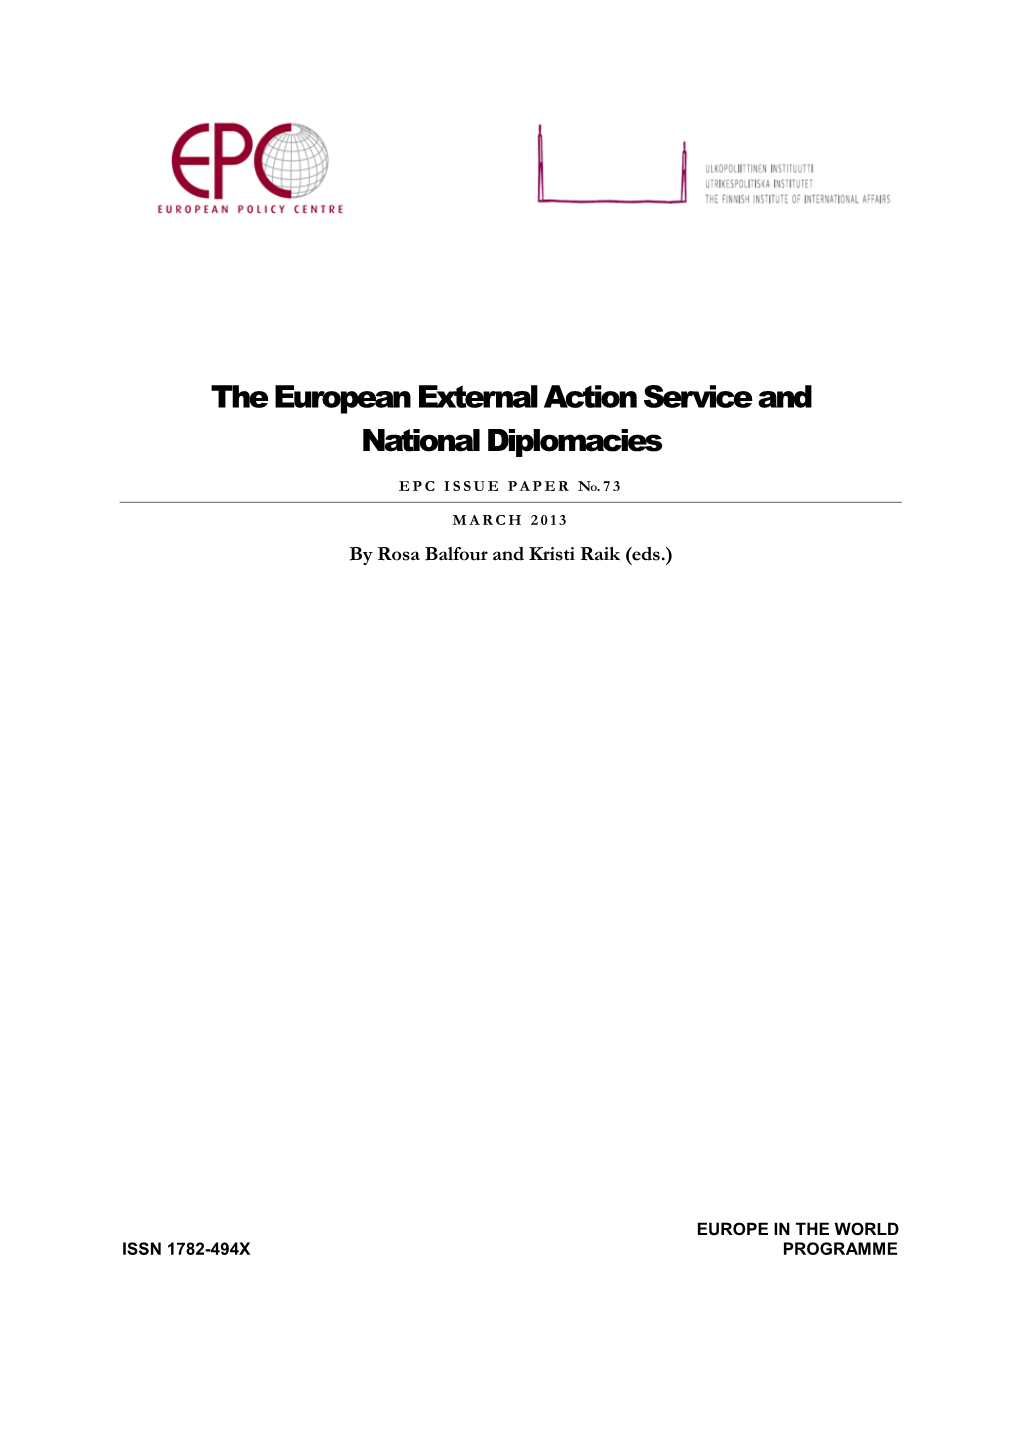 The European External Action Service and National Diplomacies